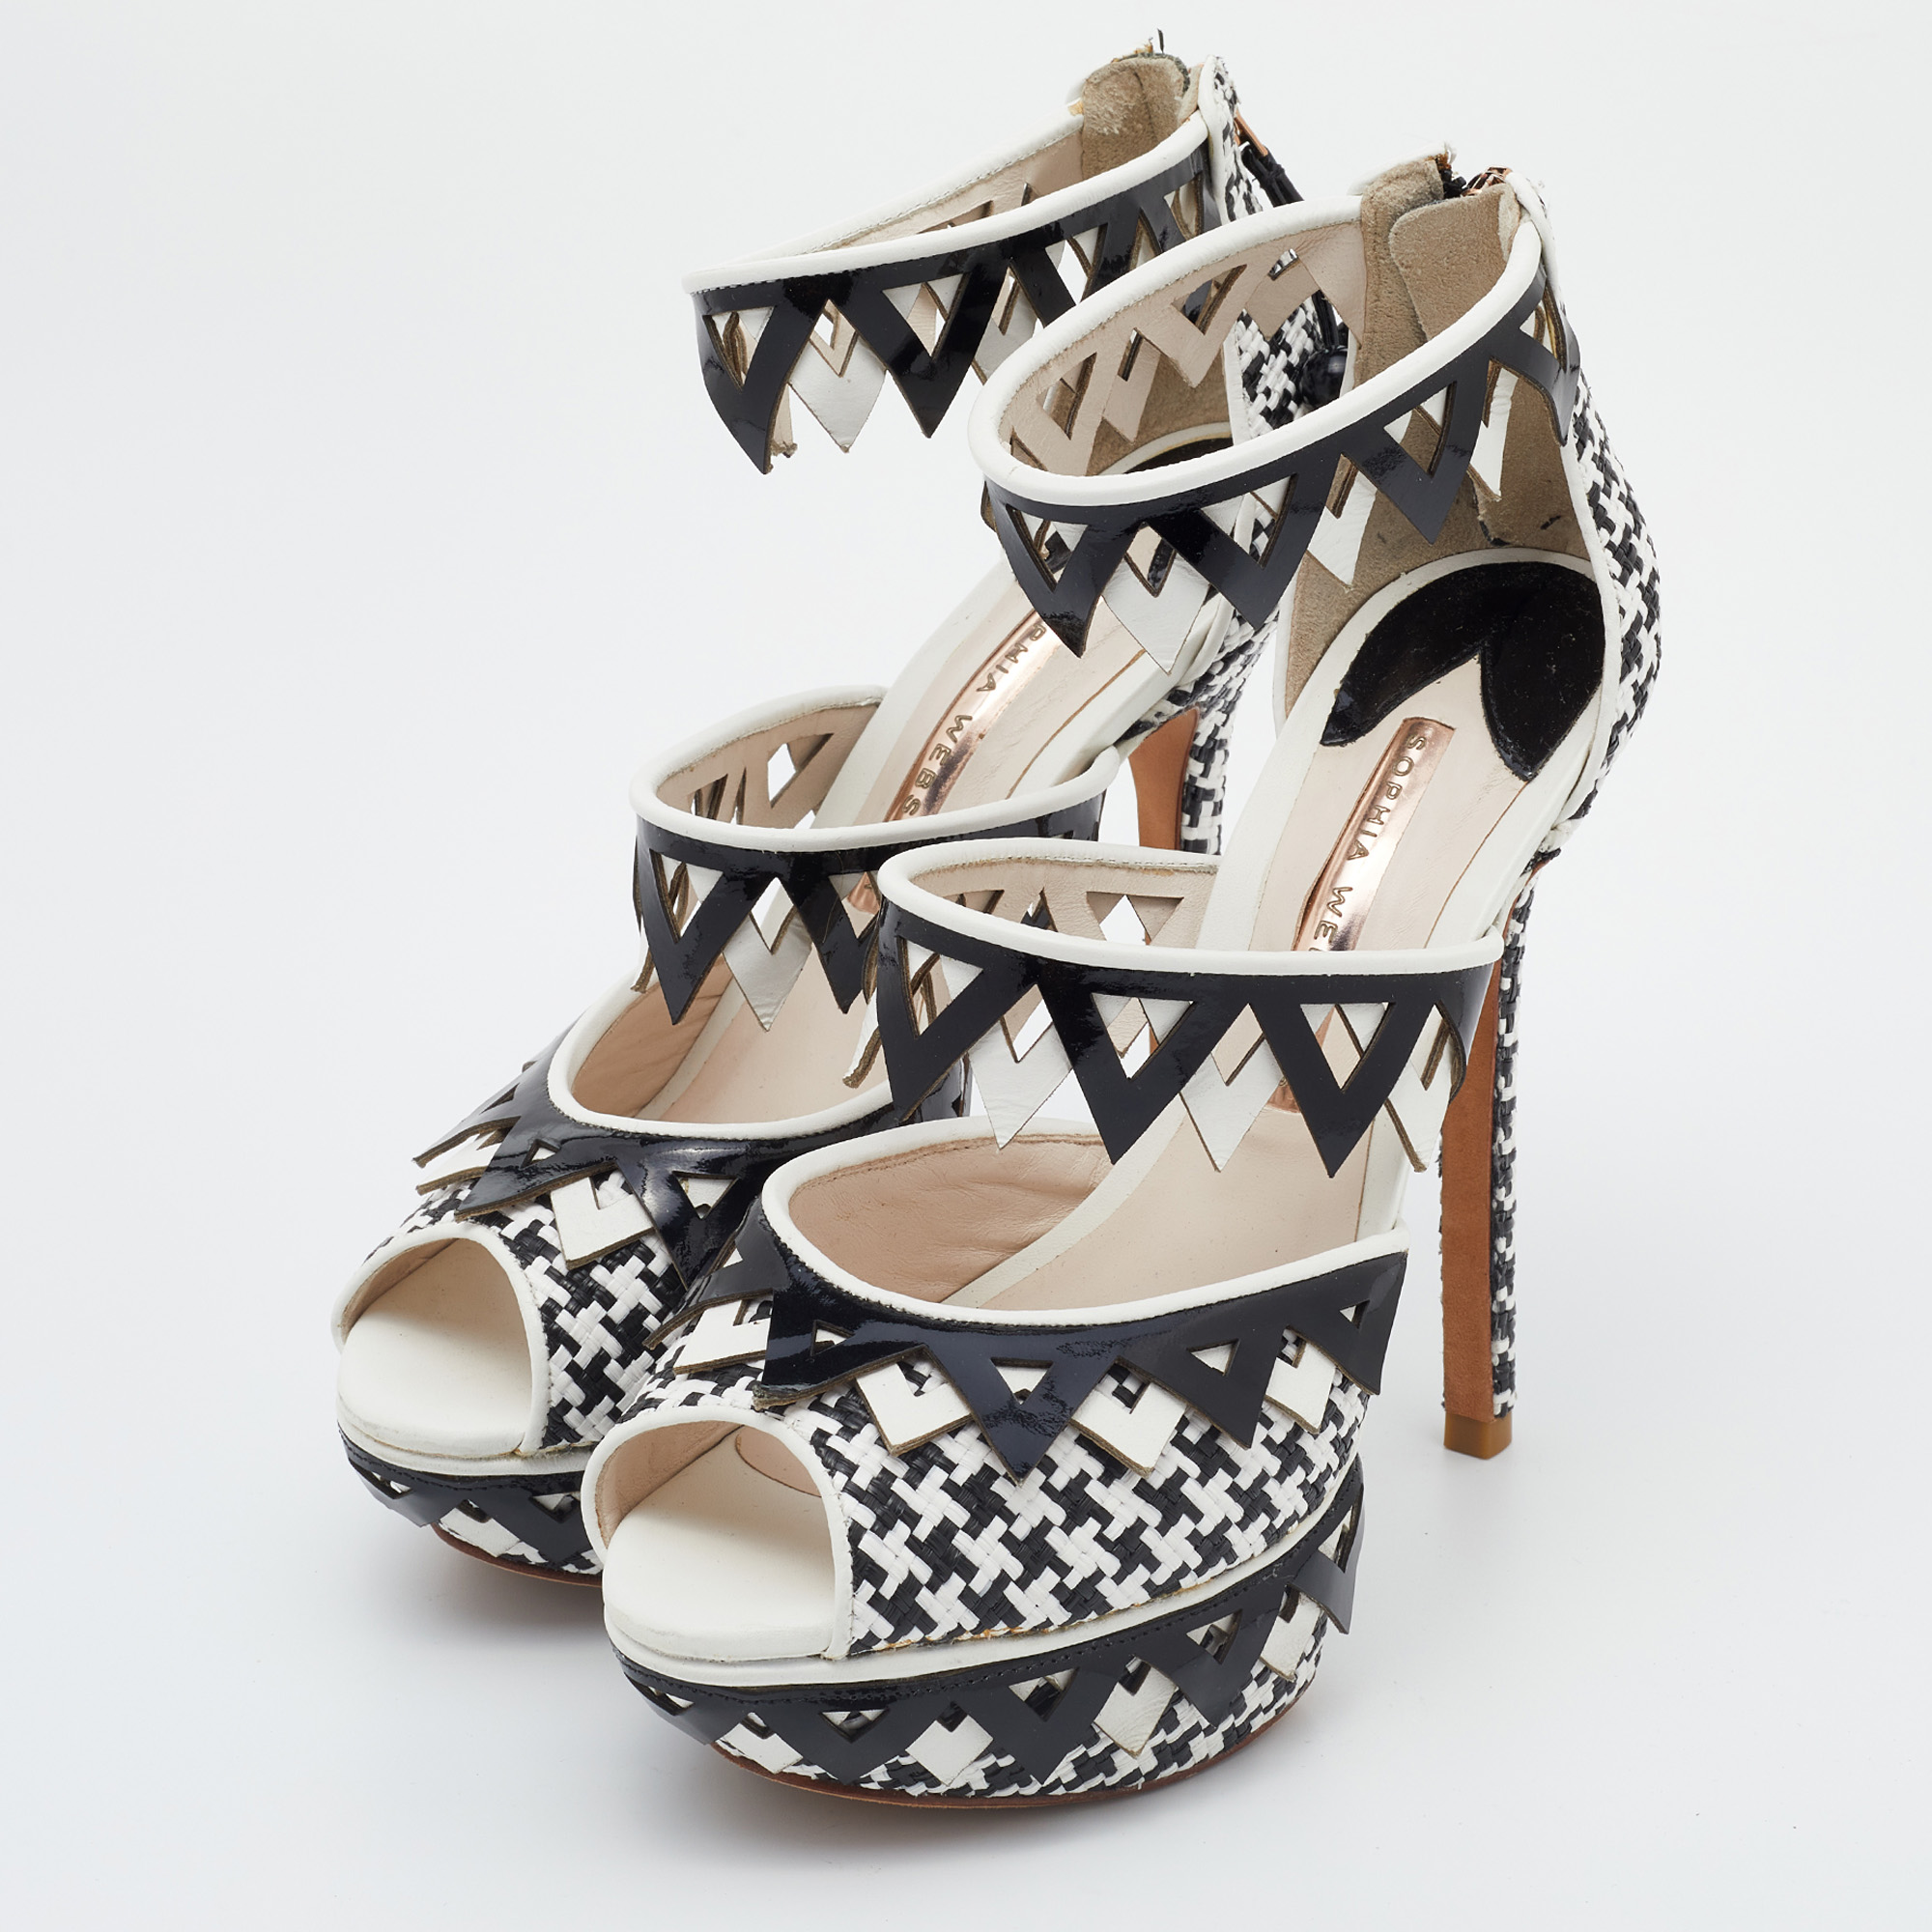 Sophia Webster Black/White Woven Raffia and Leather Platform Ankle Strap Sandals Size 36